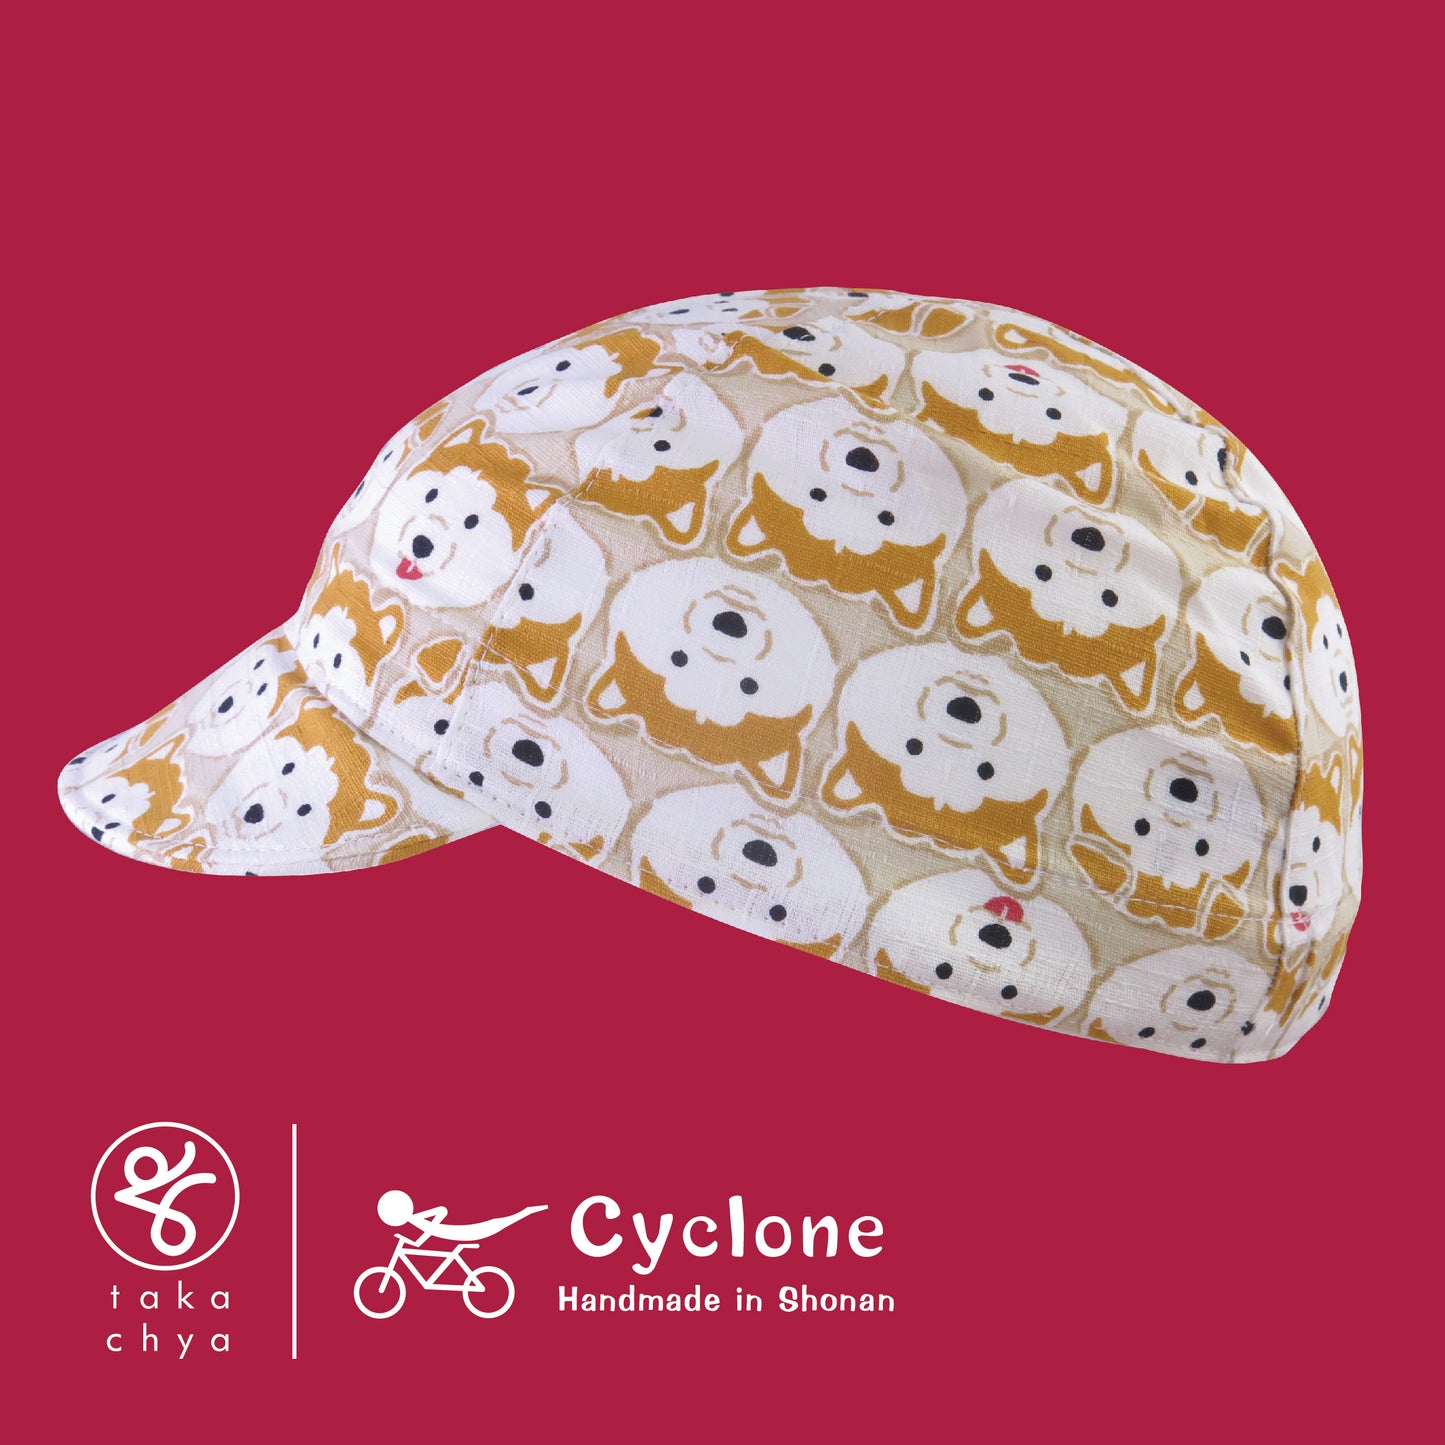 Shiba Inu - Cyclone Chee Japanese Handmade Cycling Cap